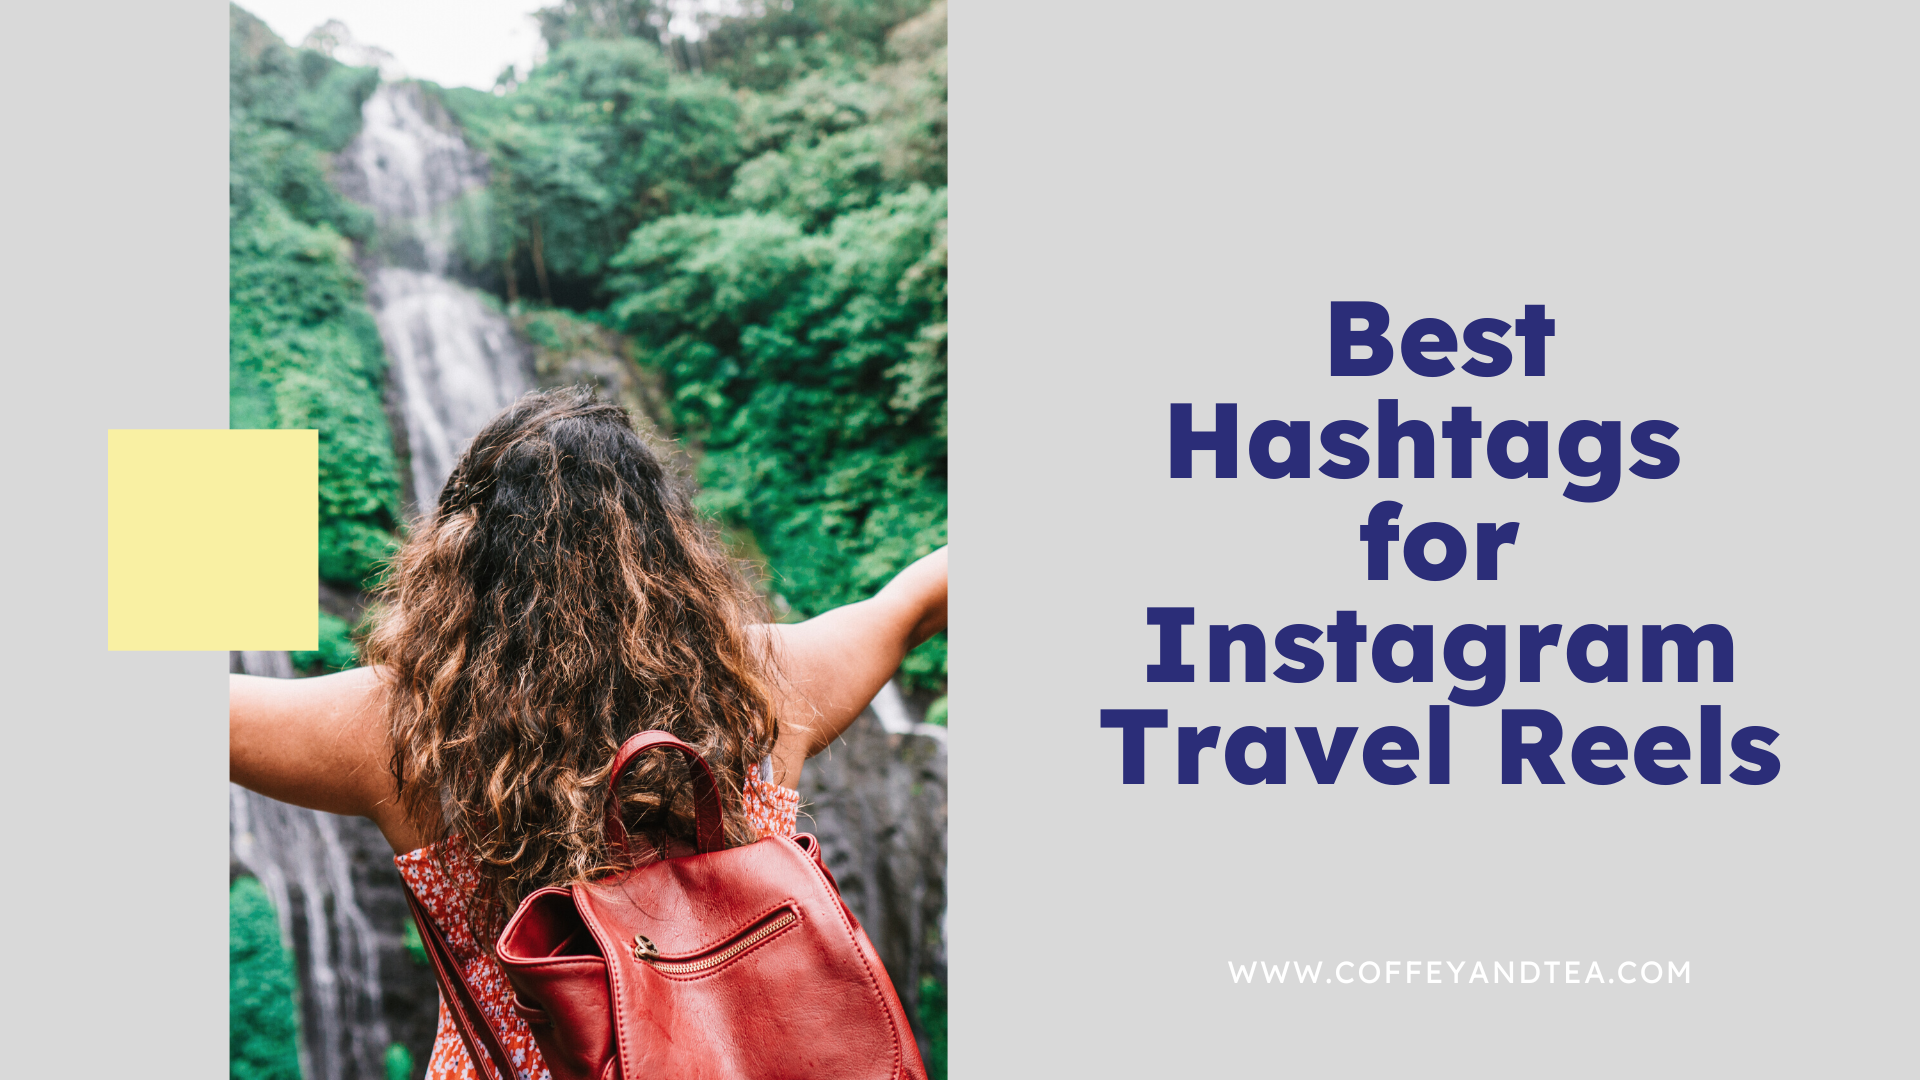 hashtags for travel reels on instagram